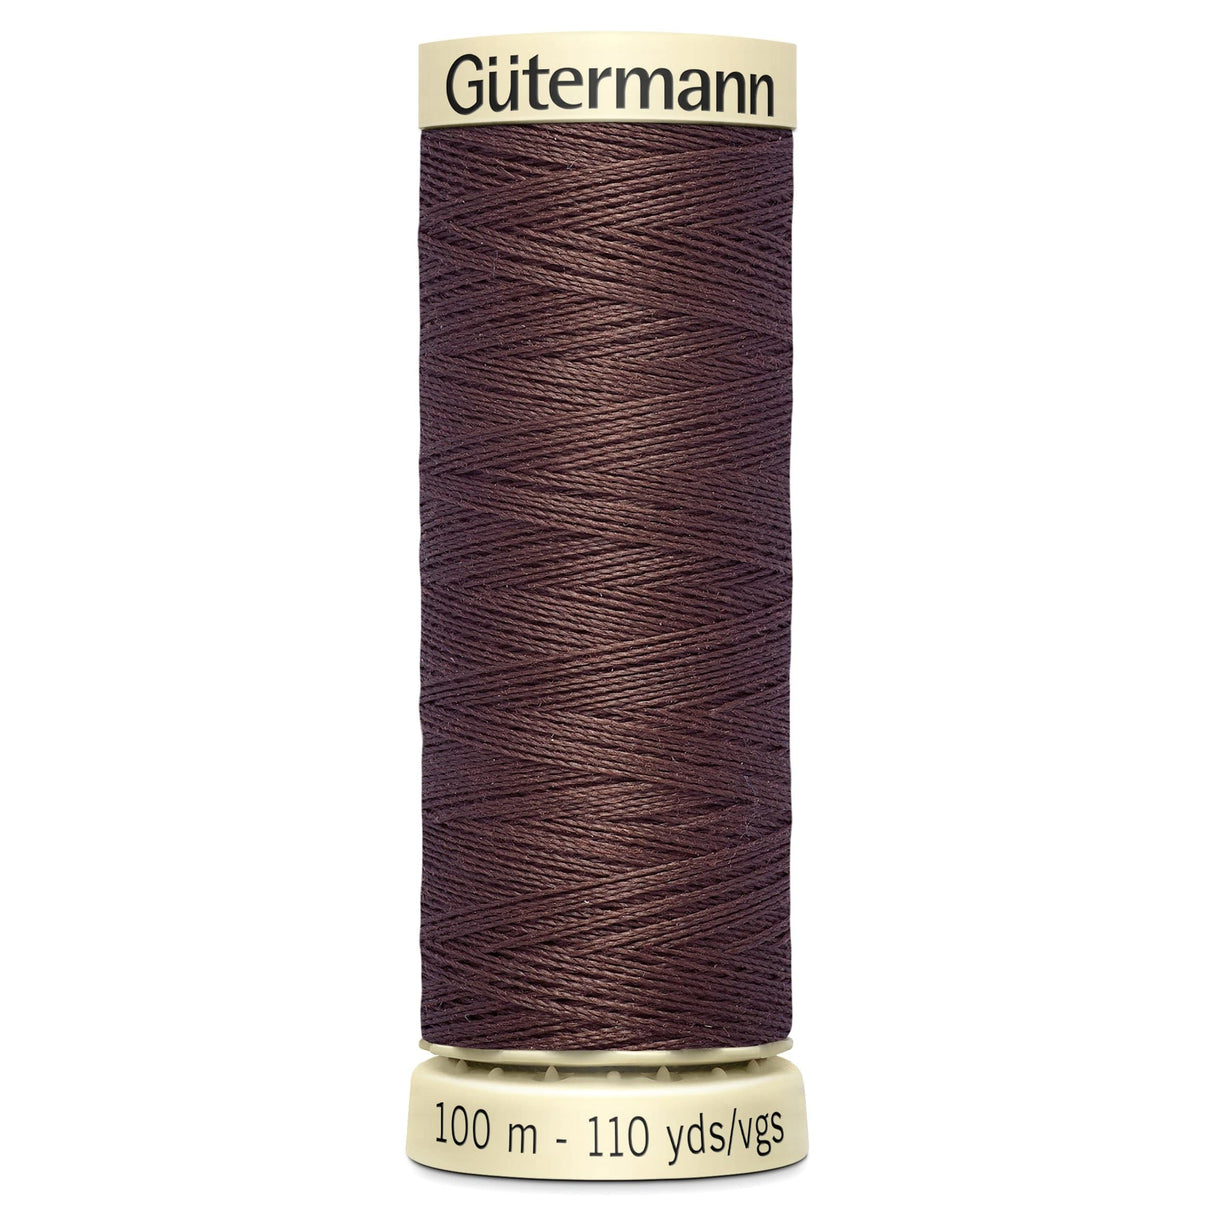 Groves Haberdashery 446 Gutermann Thread Sewing Cotton 100 m Black to Pink